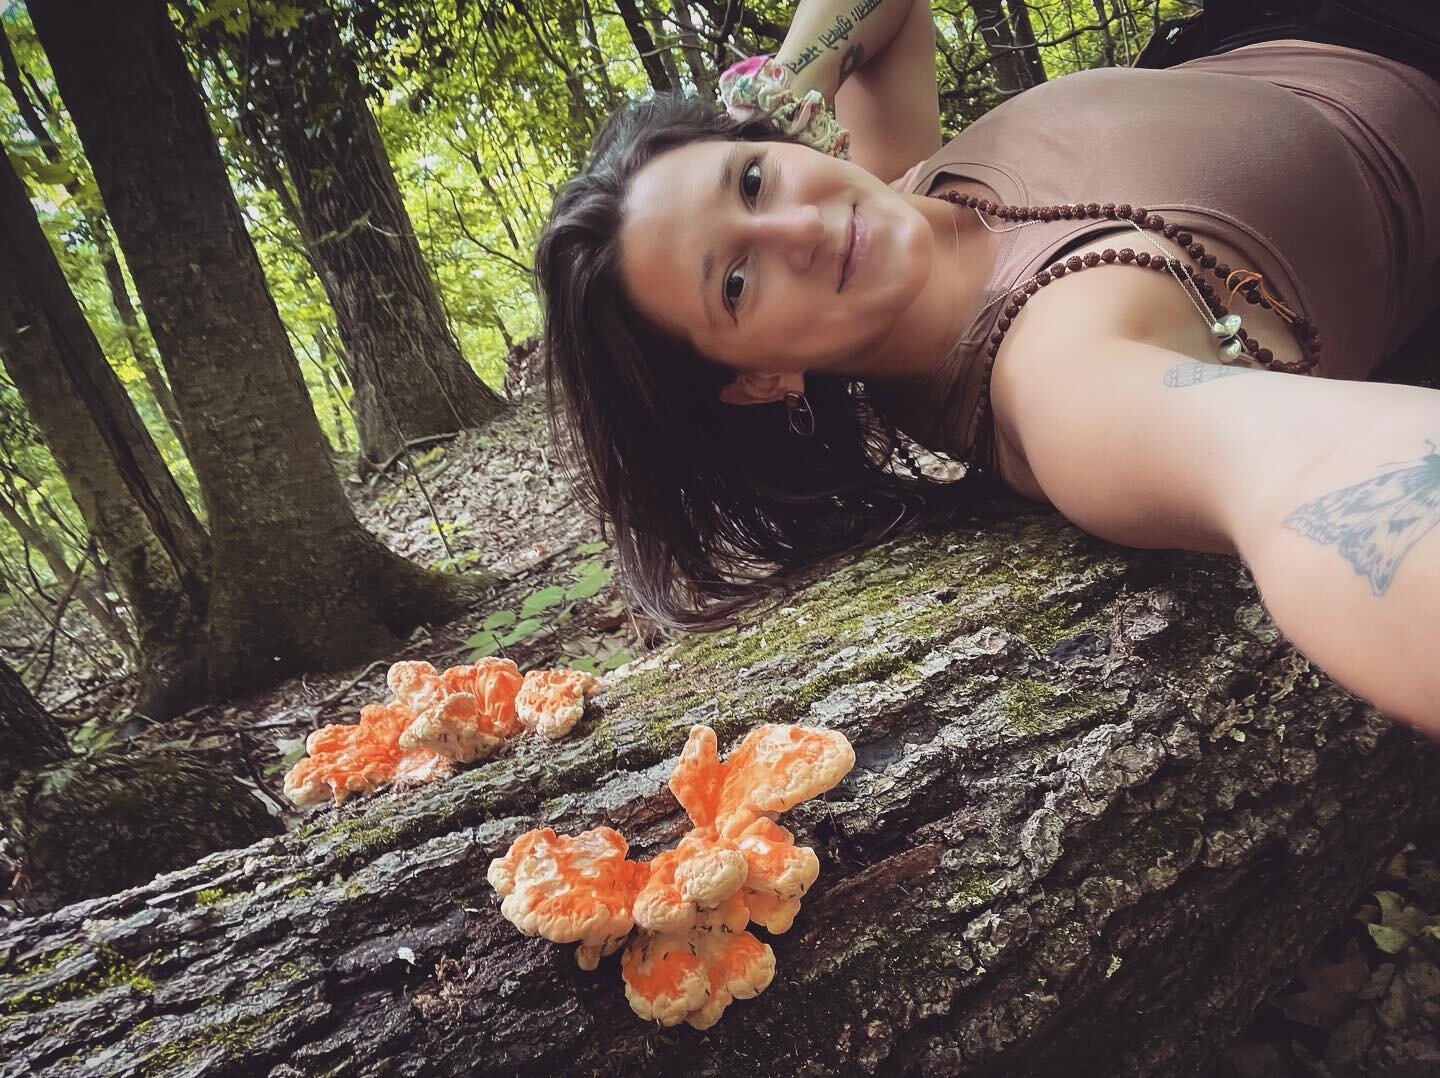 Causal chick of the woods 🤣
 
 #chickenofthewoods #Laetiporussulphureus #Laetiporus #yum #foragedfood #fungiidentification